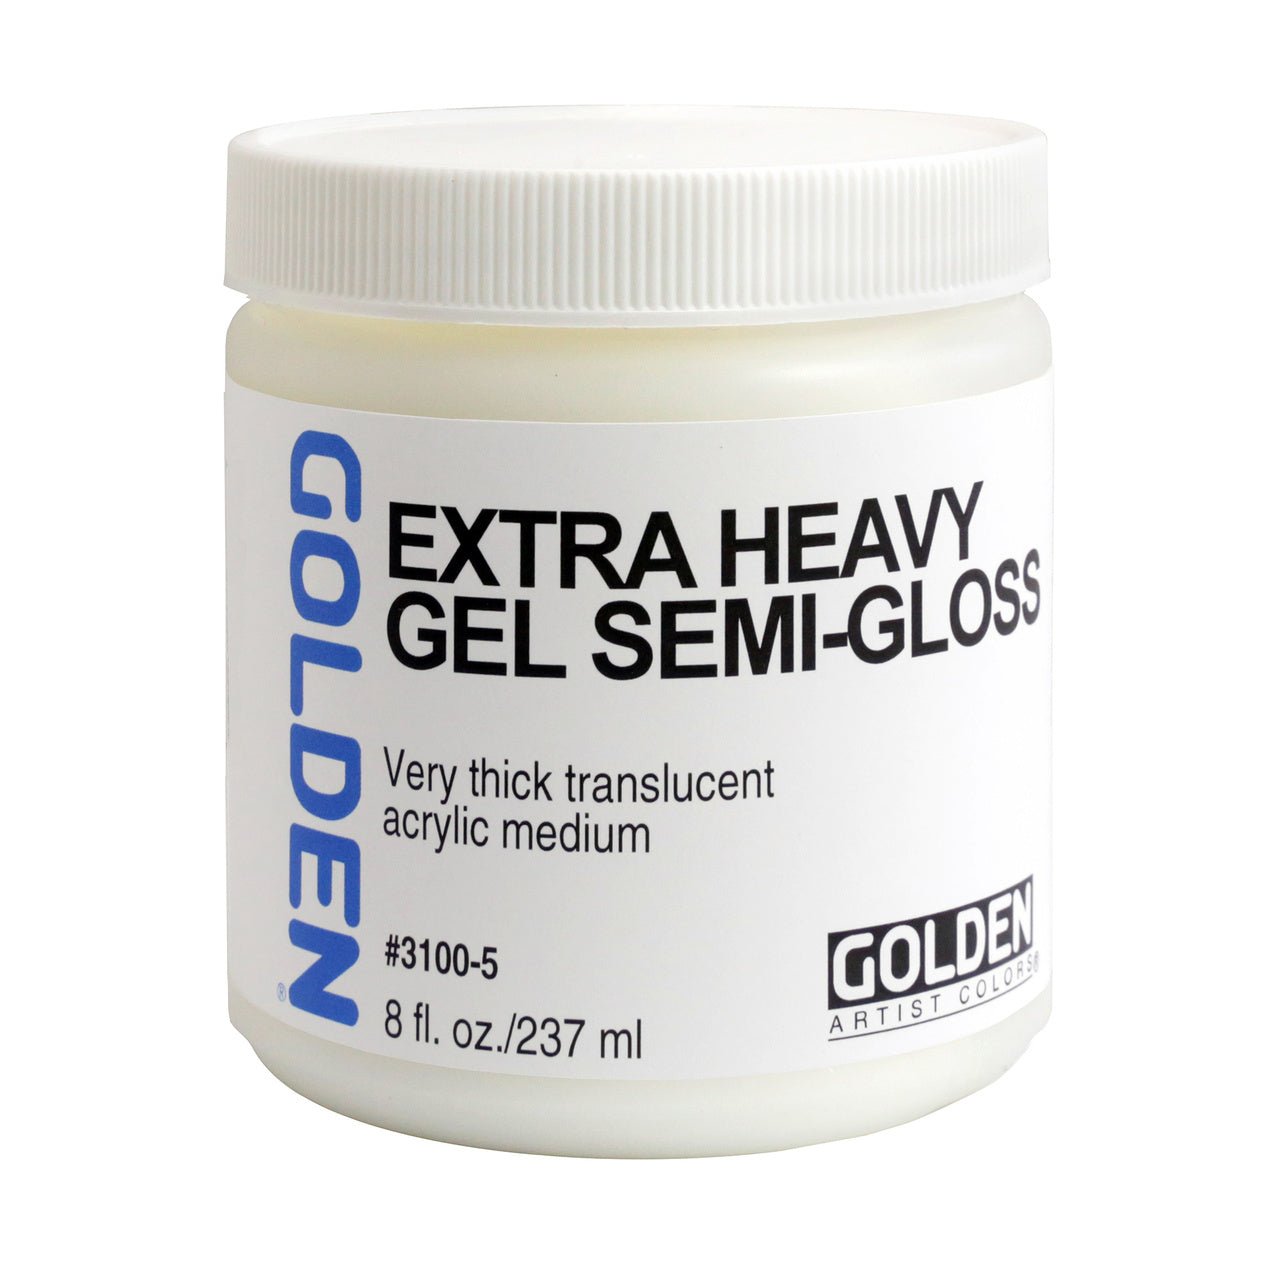 Golden Extra-heavy Gel - Semi Gloss 8 oz - merriartist.com